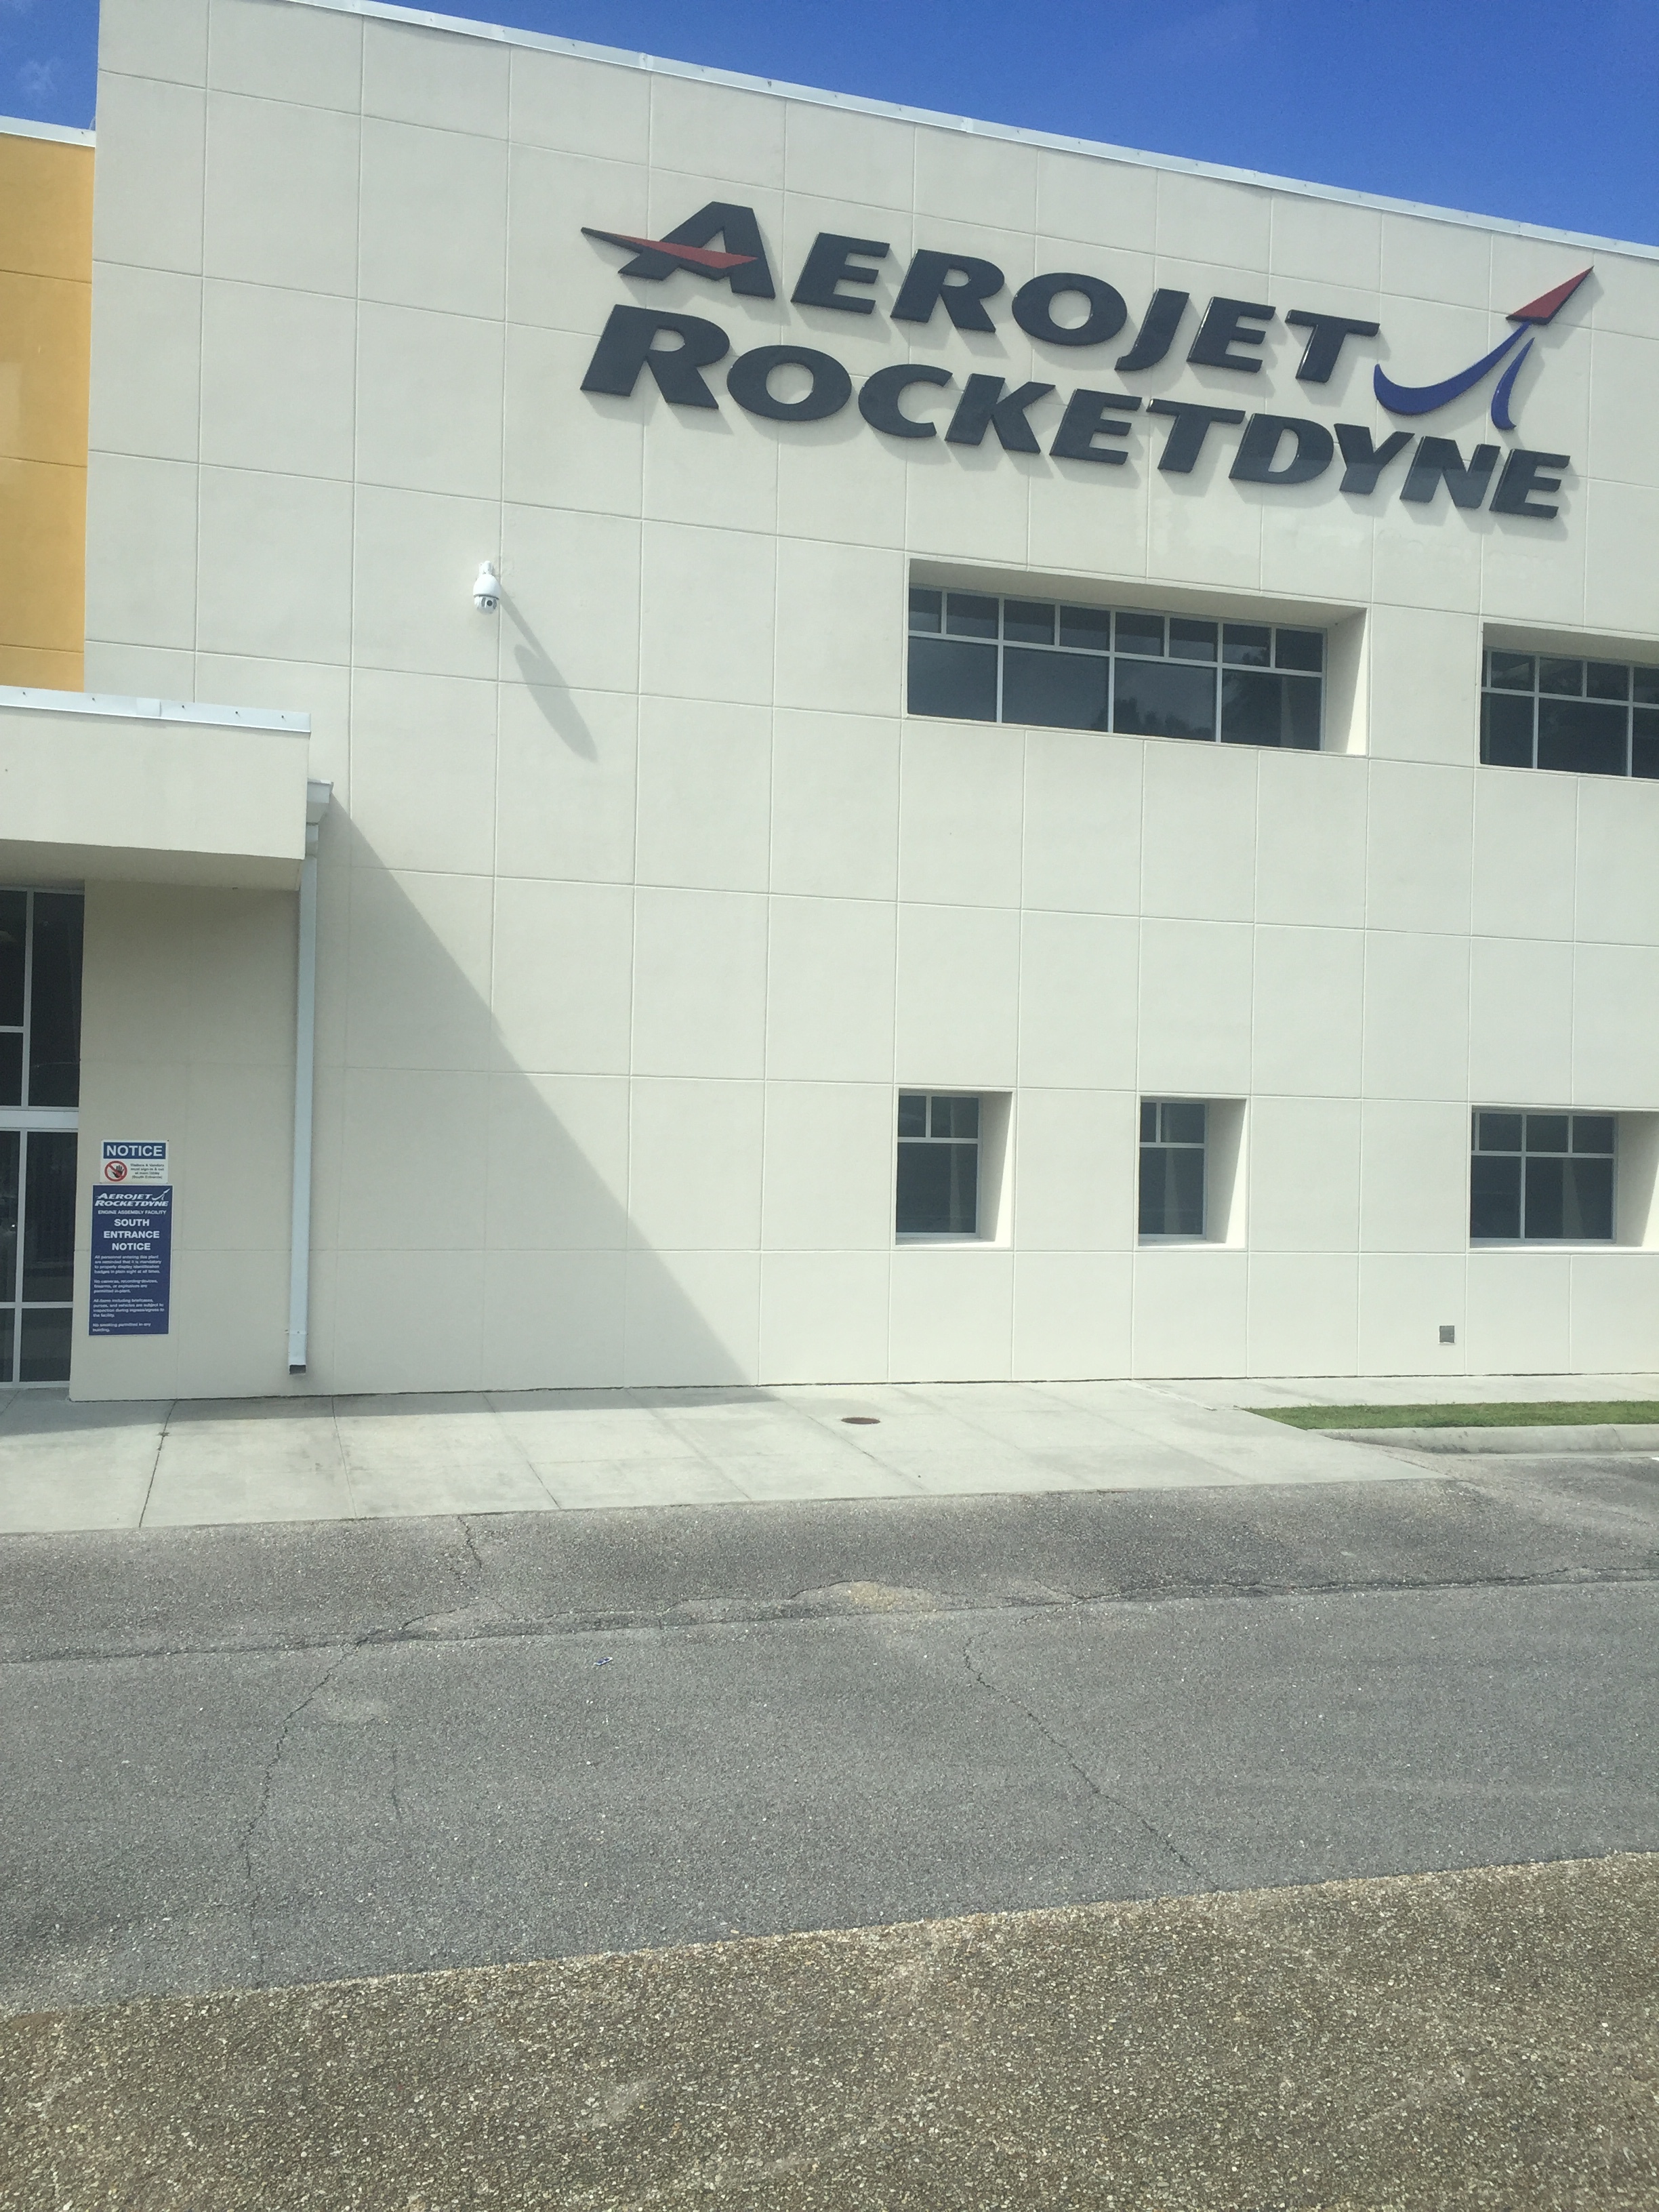 Facility for SLS Rocket Engines